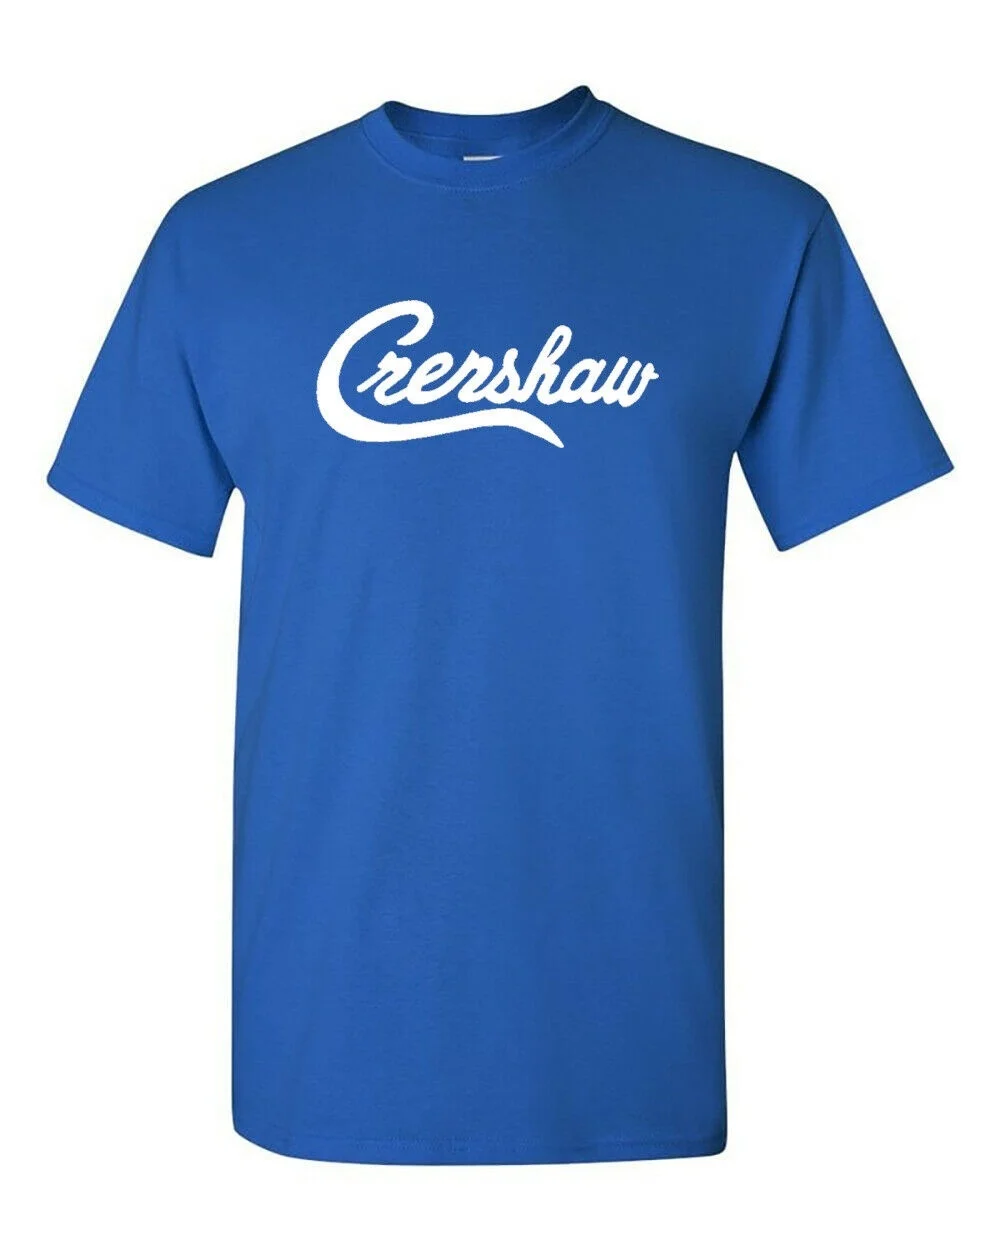 Fashion Show-JF Nipsey Hussle Legendary Crenshaw футболка унисекс в стиле хип-хоп рэп